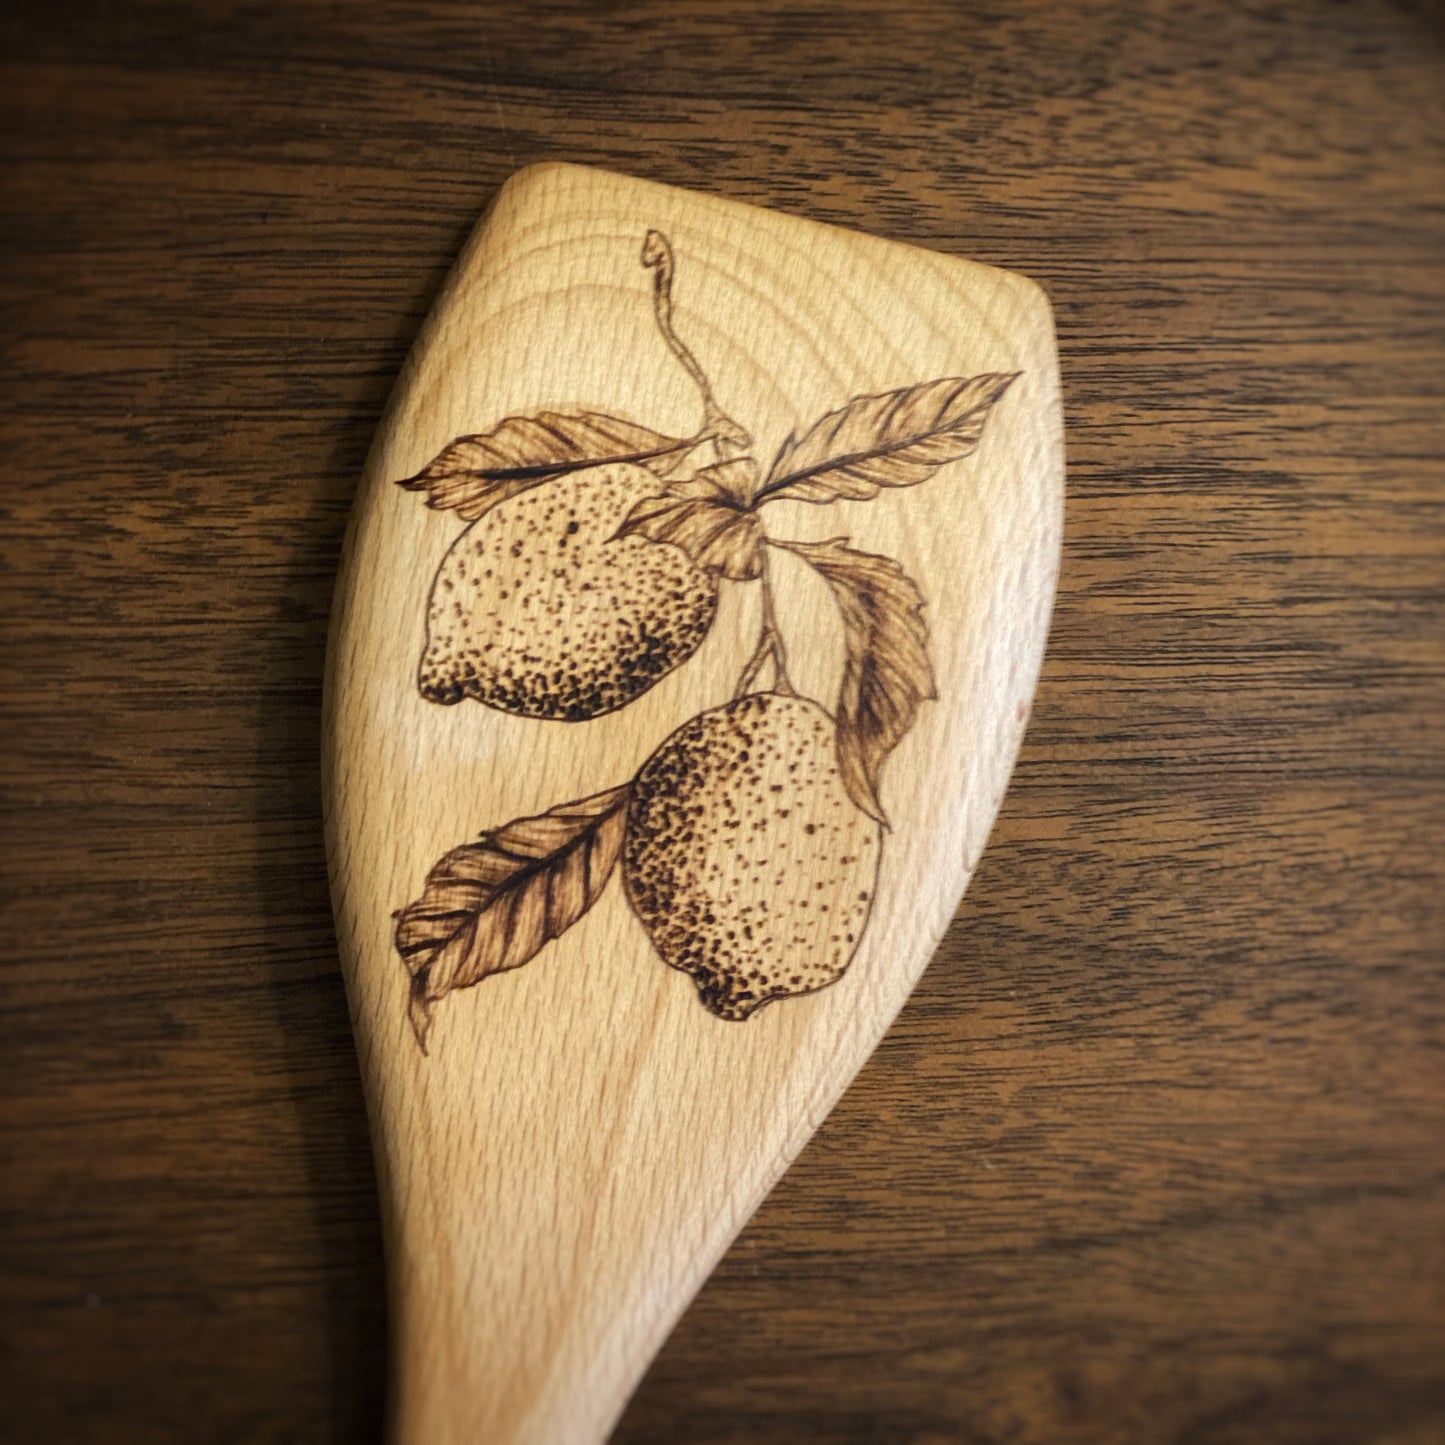 Lemon Wood Burned Spoon